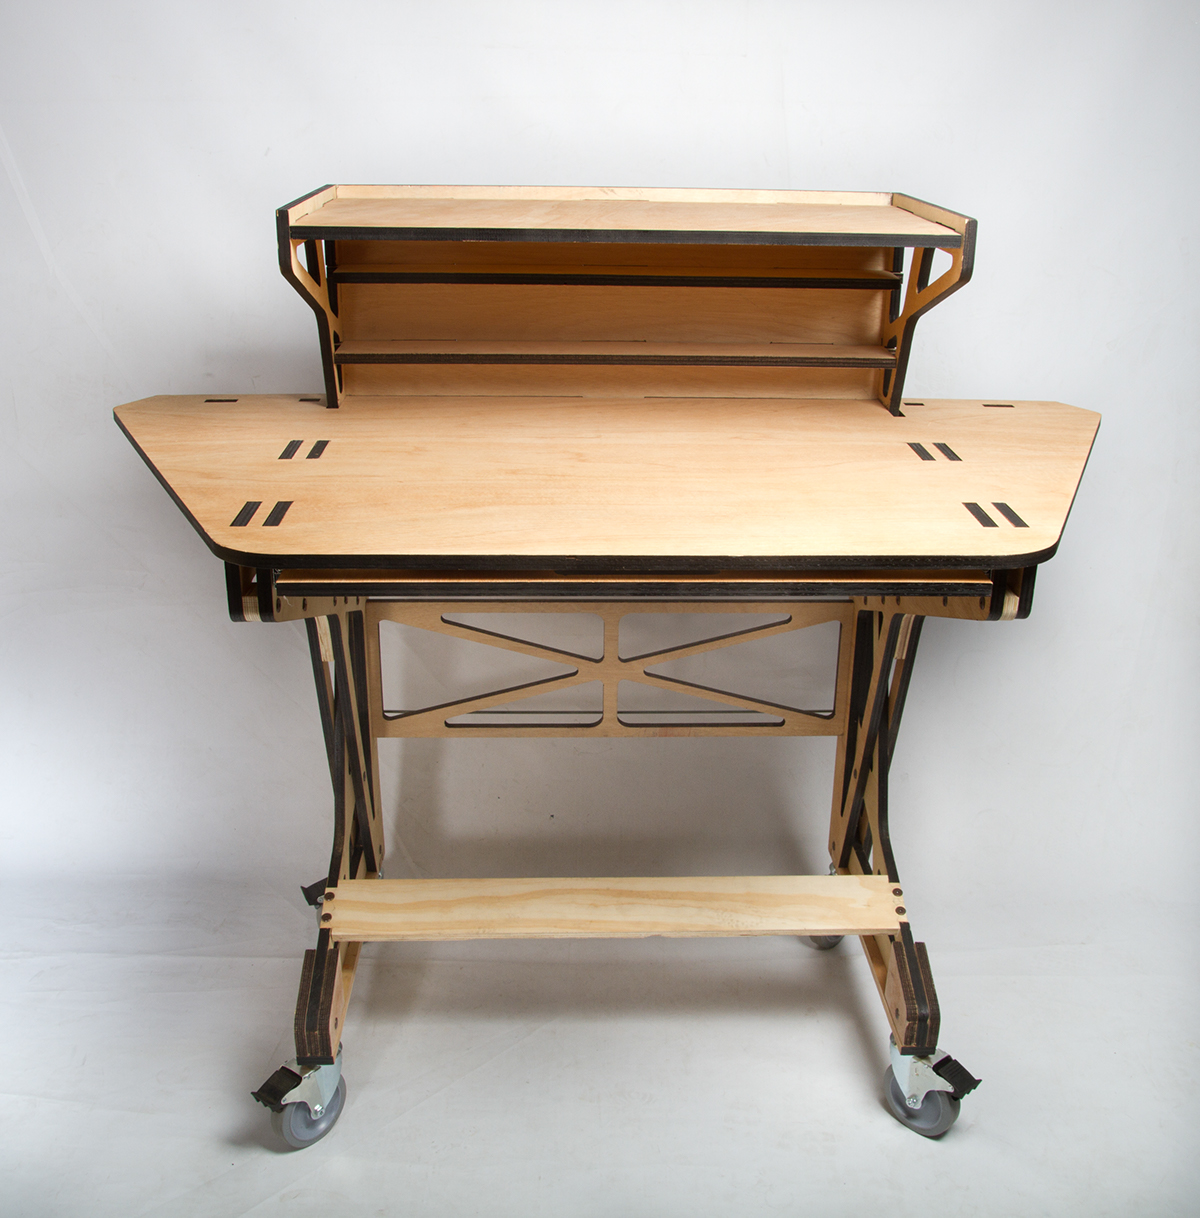 desk furniture fabrication 3D Printing brown risd prince lab makerbot